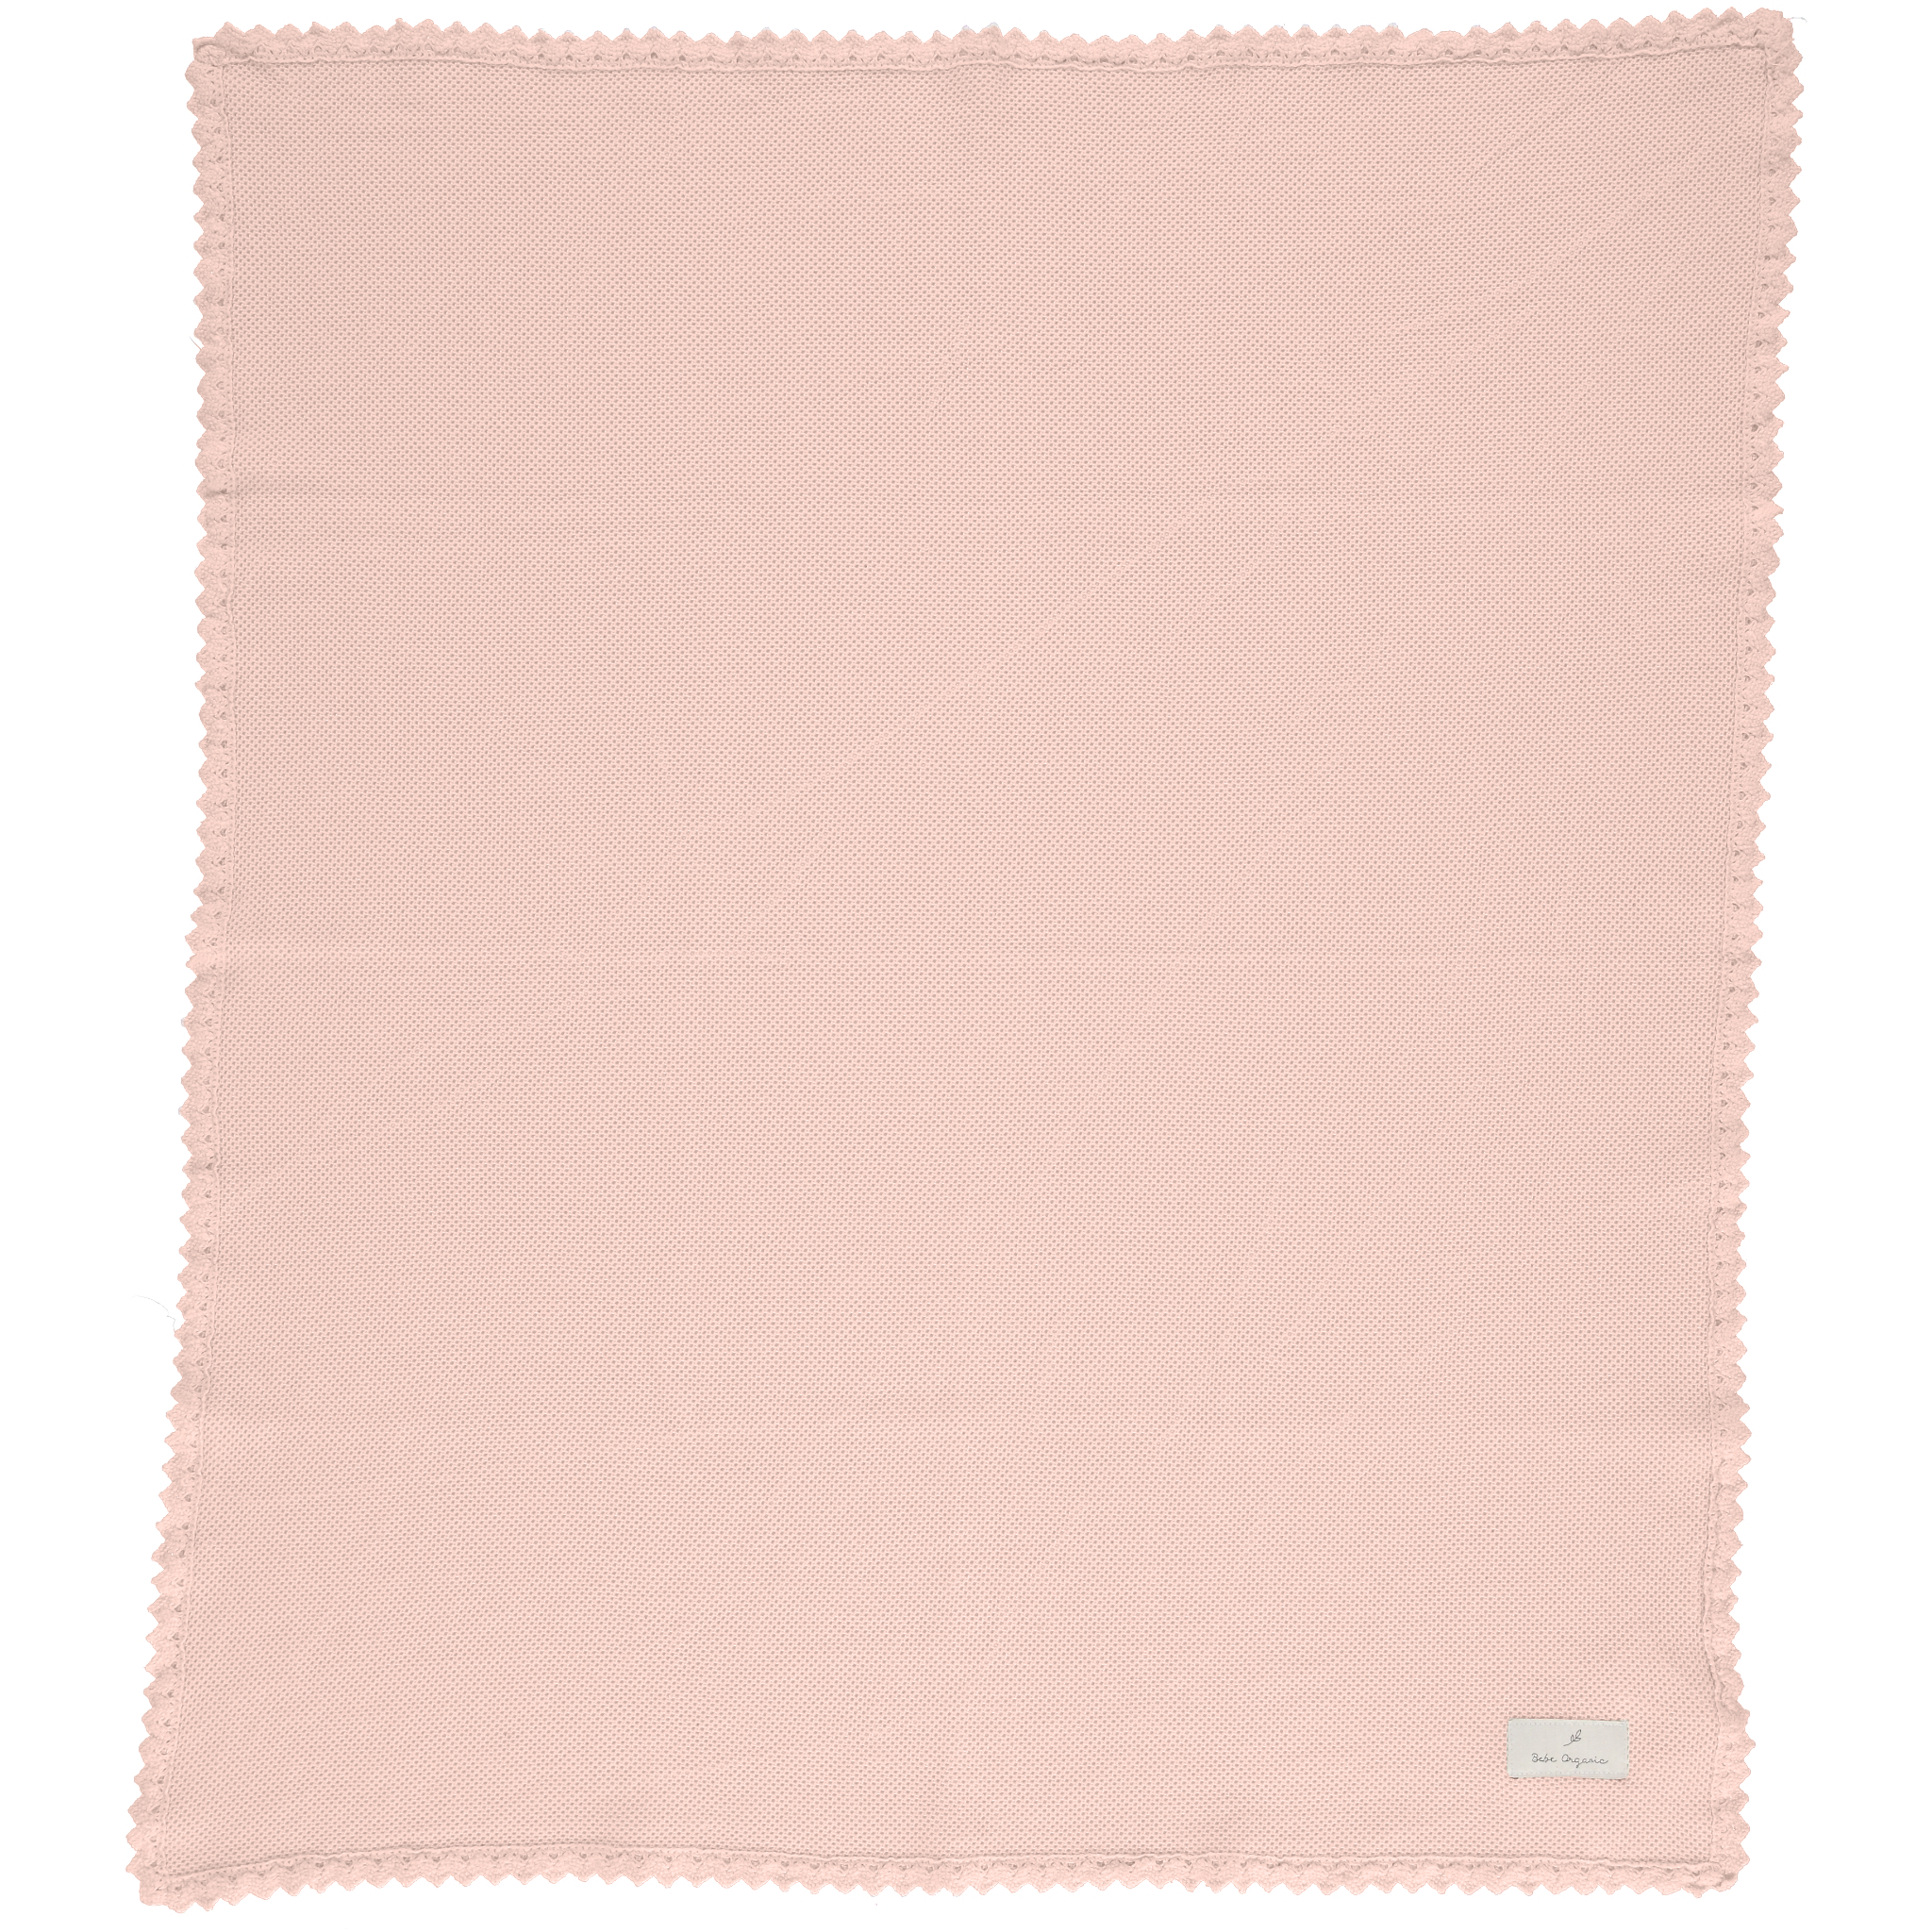 Dusty Rose Honeycomb Blanket